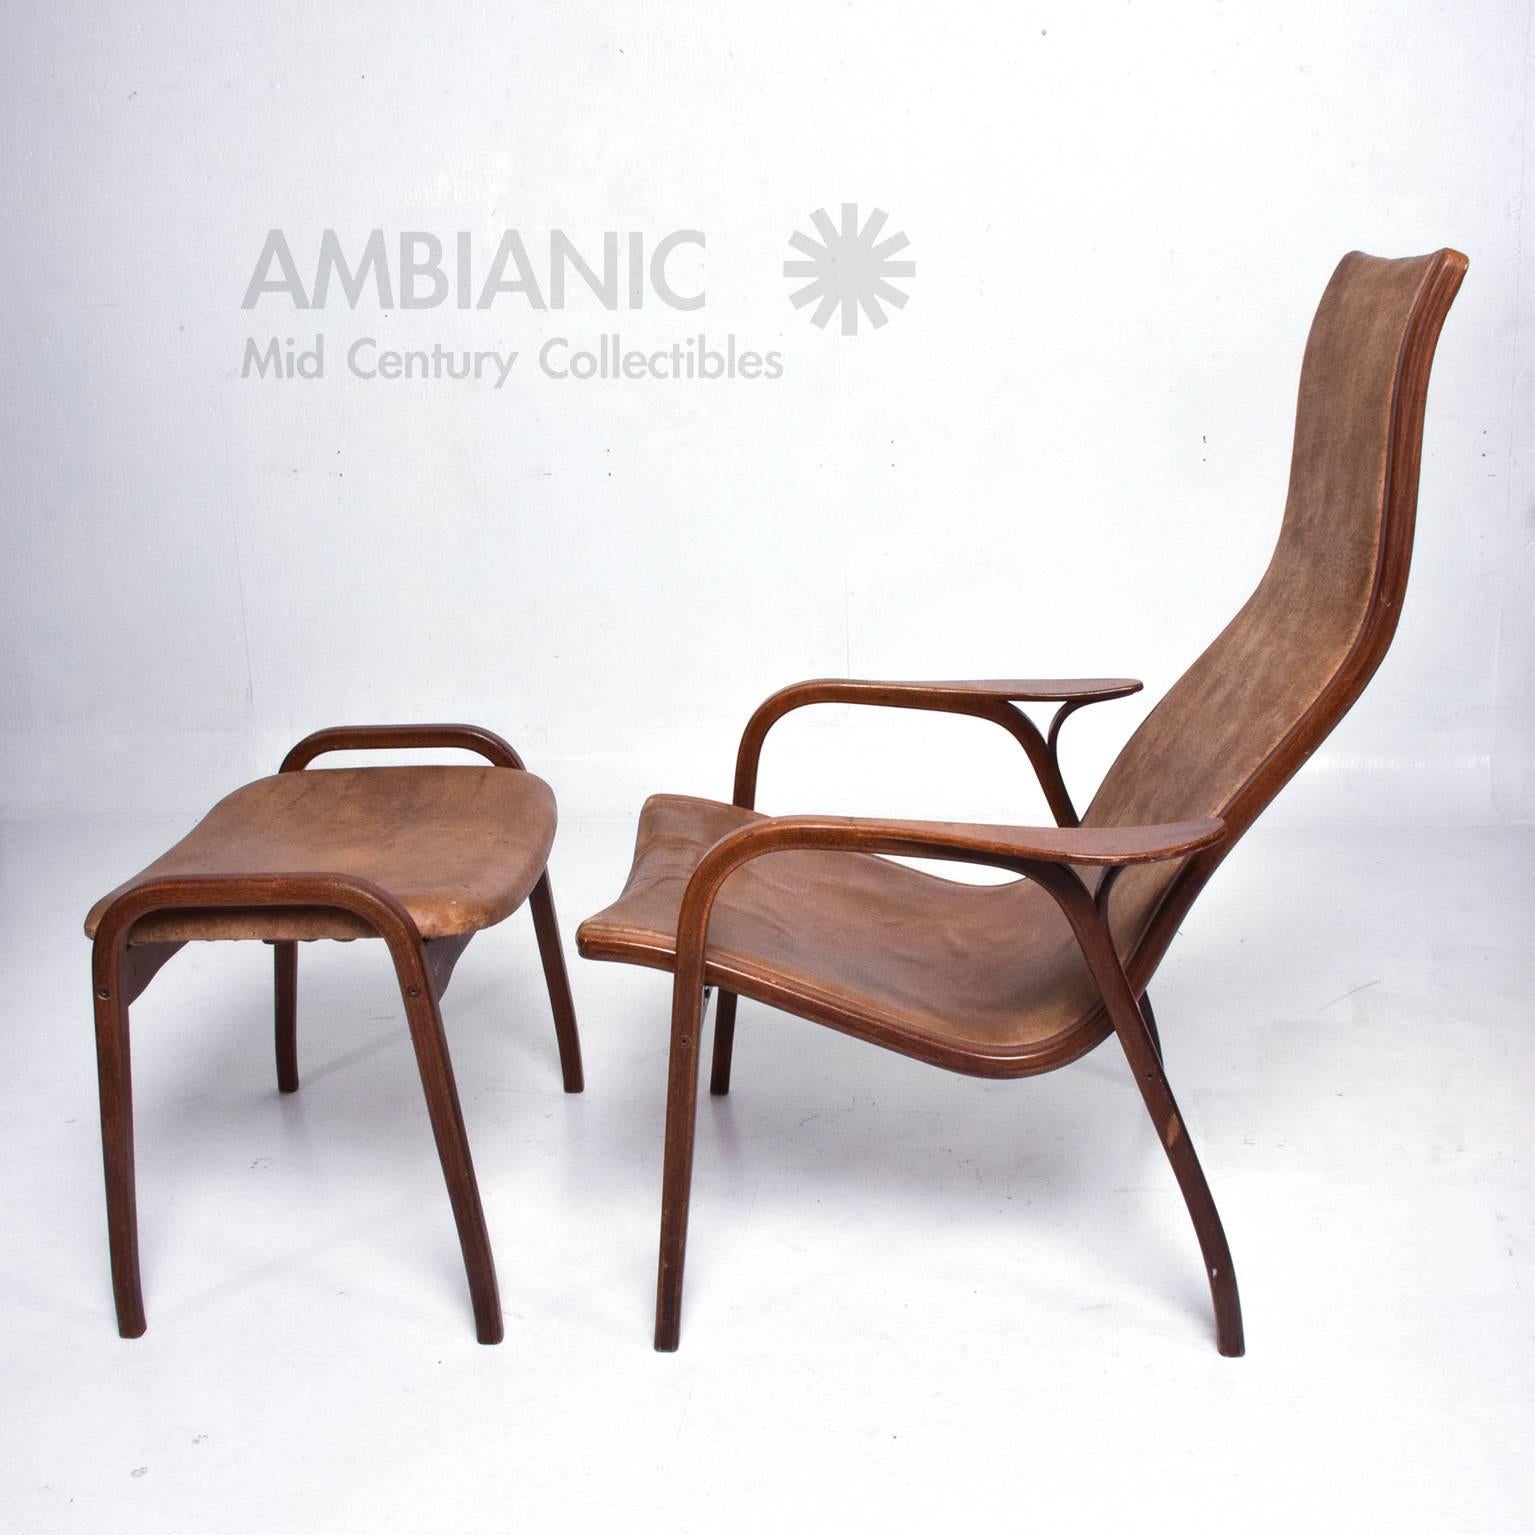 Mid-20th Century Lamino Chair by Swedese by Yngve Ekstrom Mid Century Danish Modern